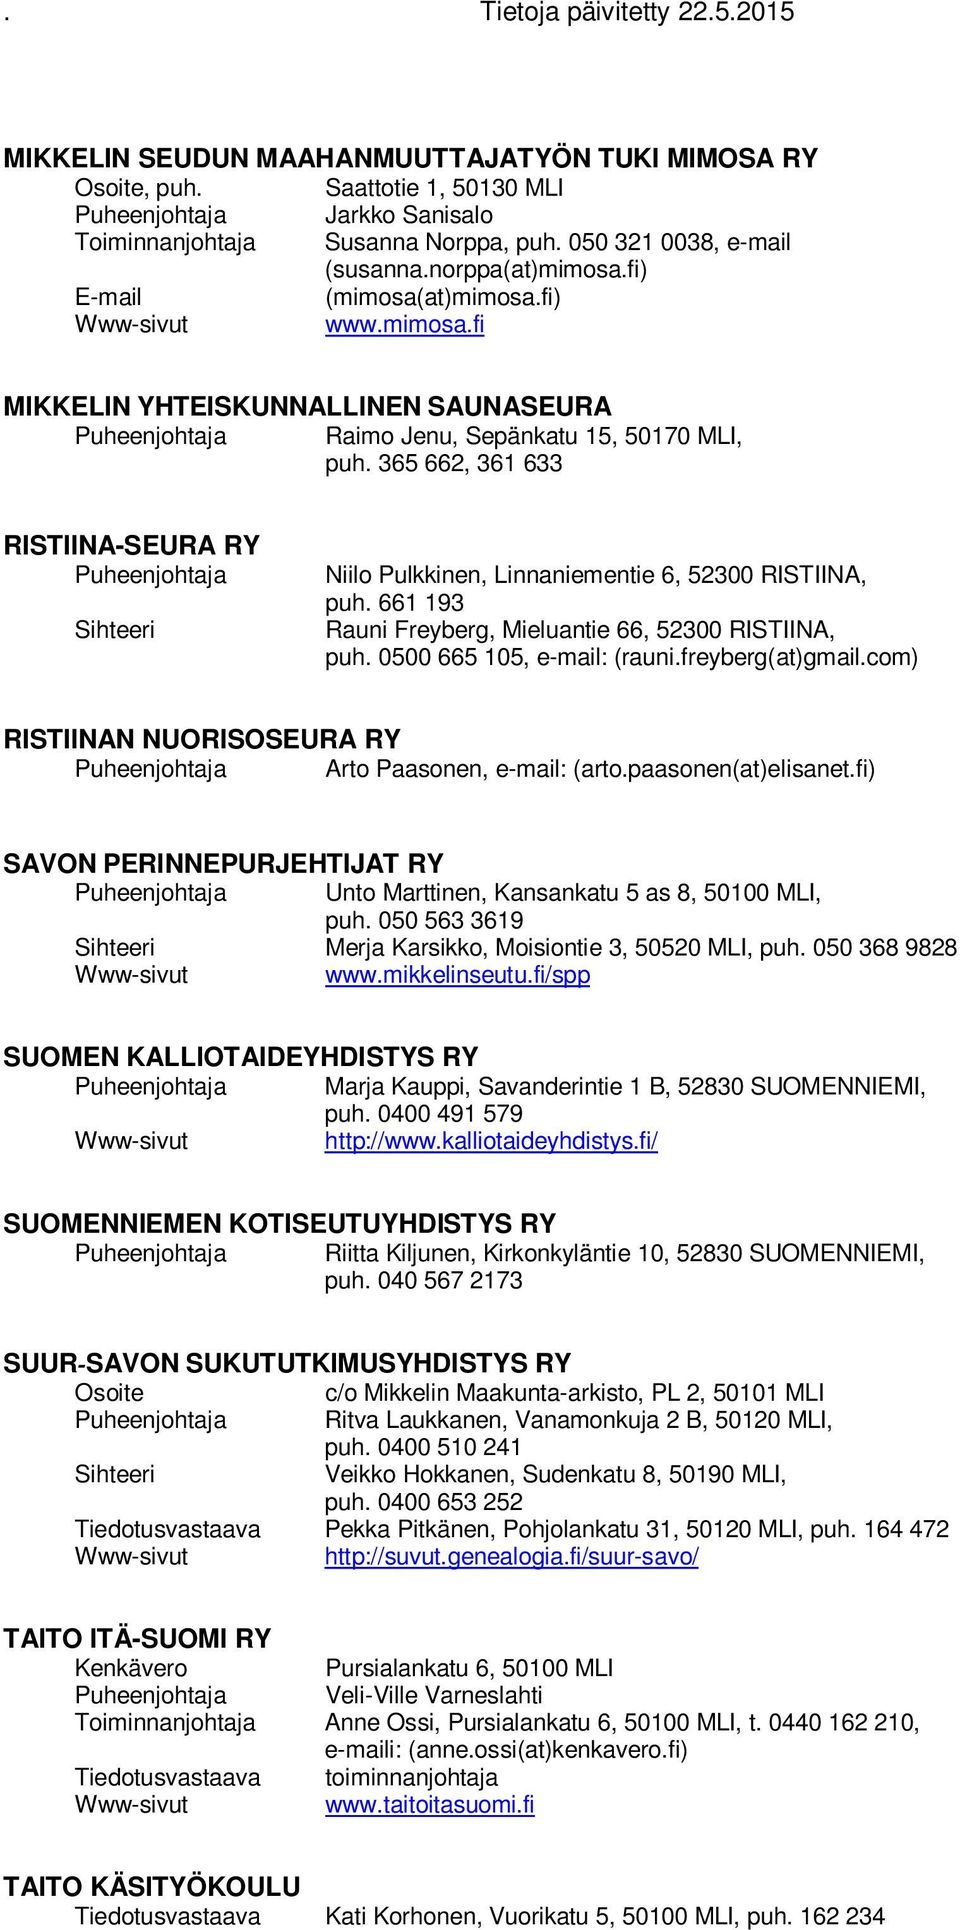 365 662, 361 633 RISTIINA-SEURA RY Niilo Pulkkinen, Linnaniementie 6, 52300 RISTIINA, puh. 661 193 Rauni Freyberg, Mieluantie 66, 52300 RISTIINA, puh. 0500 665 105, e-mail: (rauni.freyberg(at)gmail.